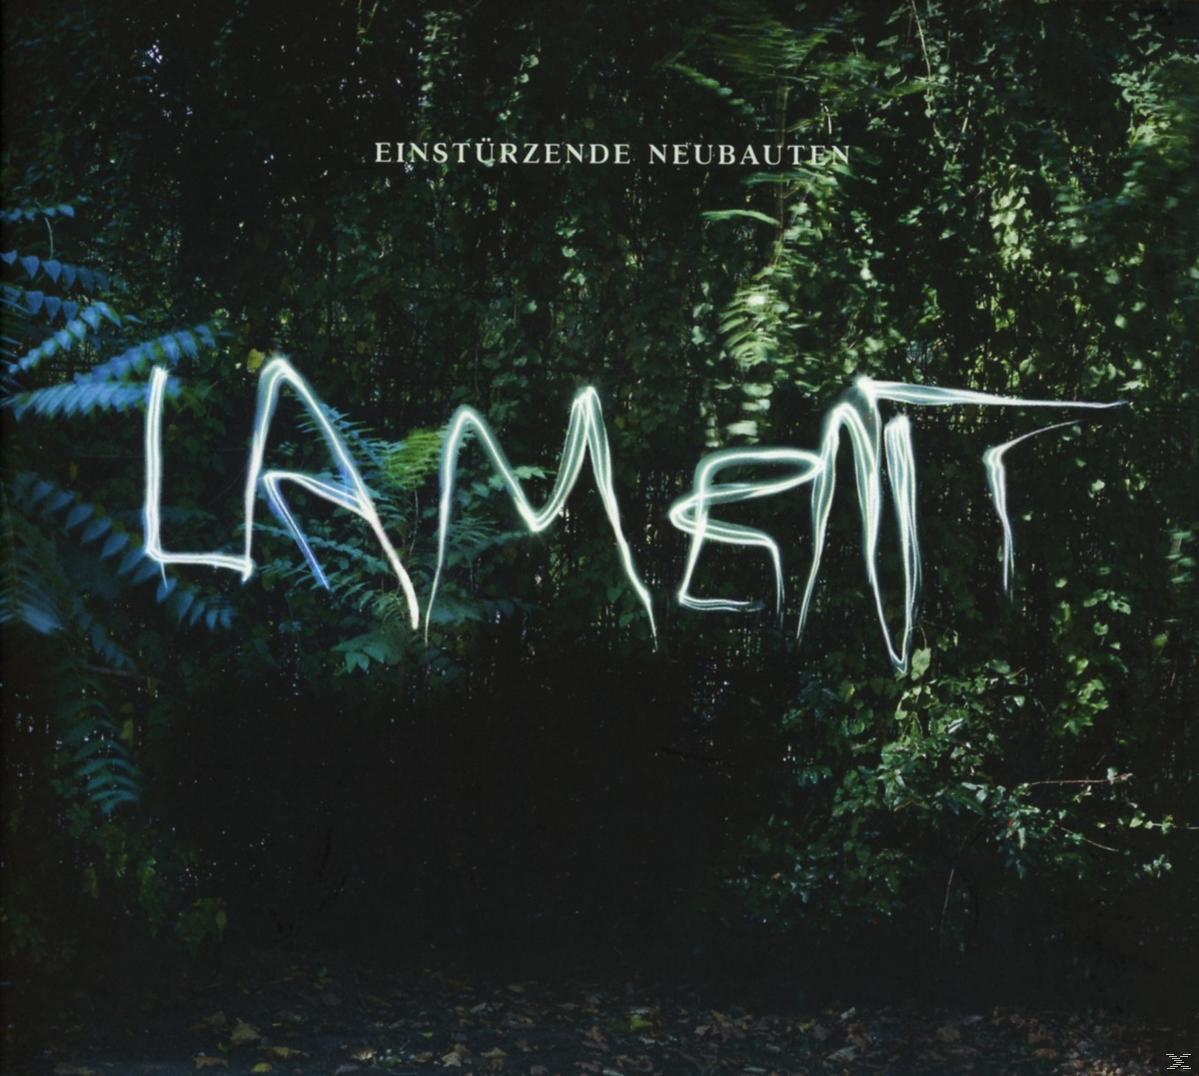 Einstürzende - Neubauten - Lament (CD)